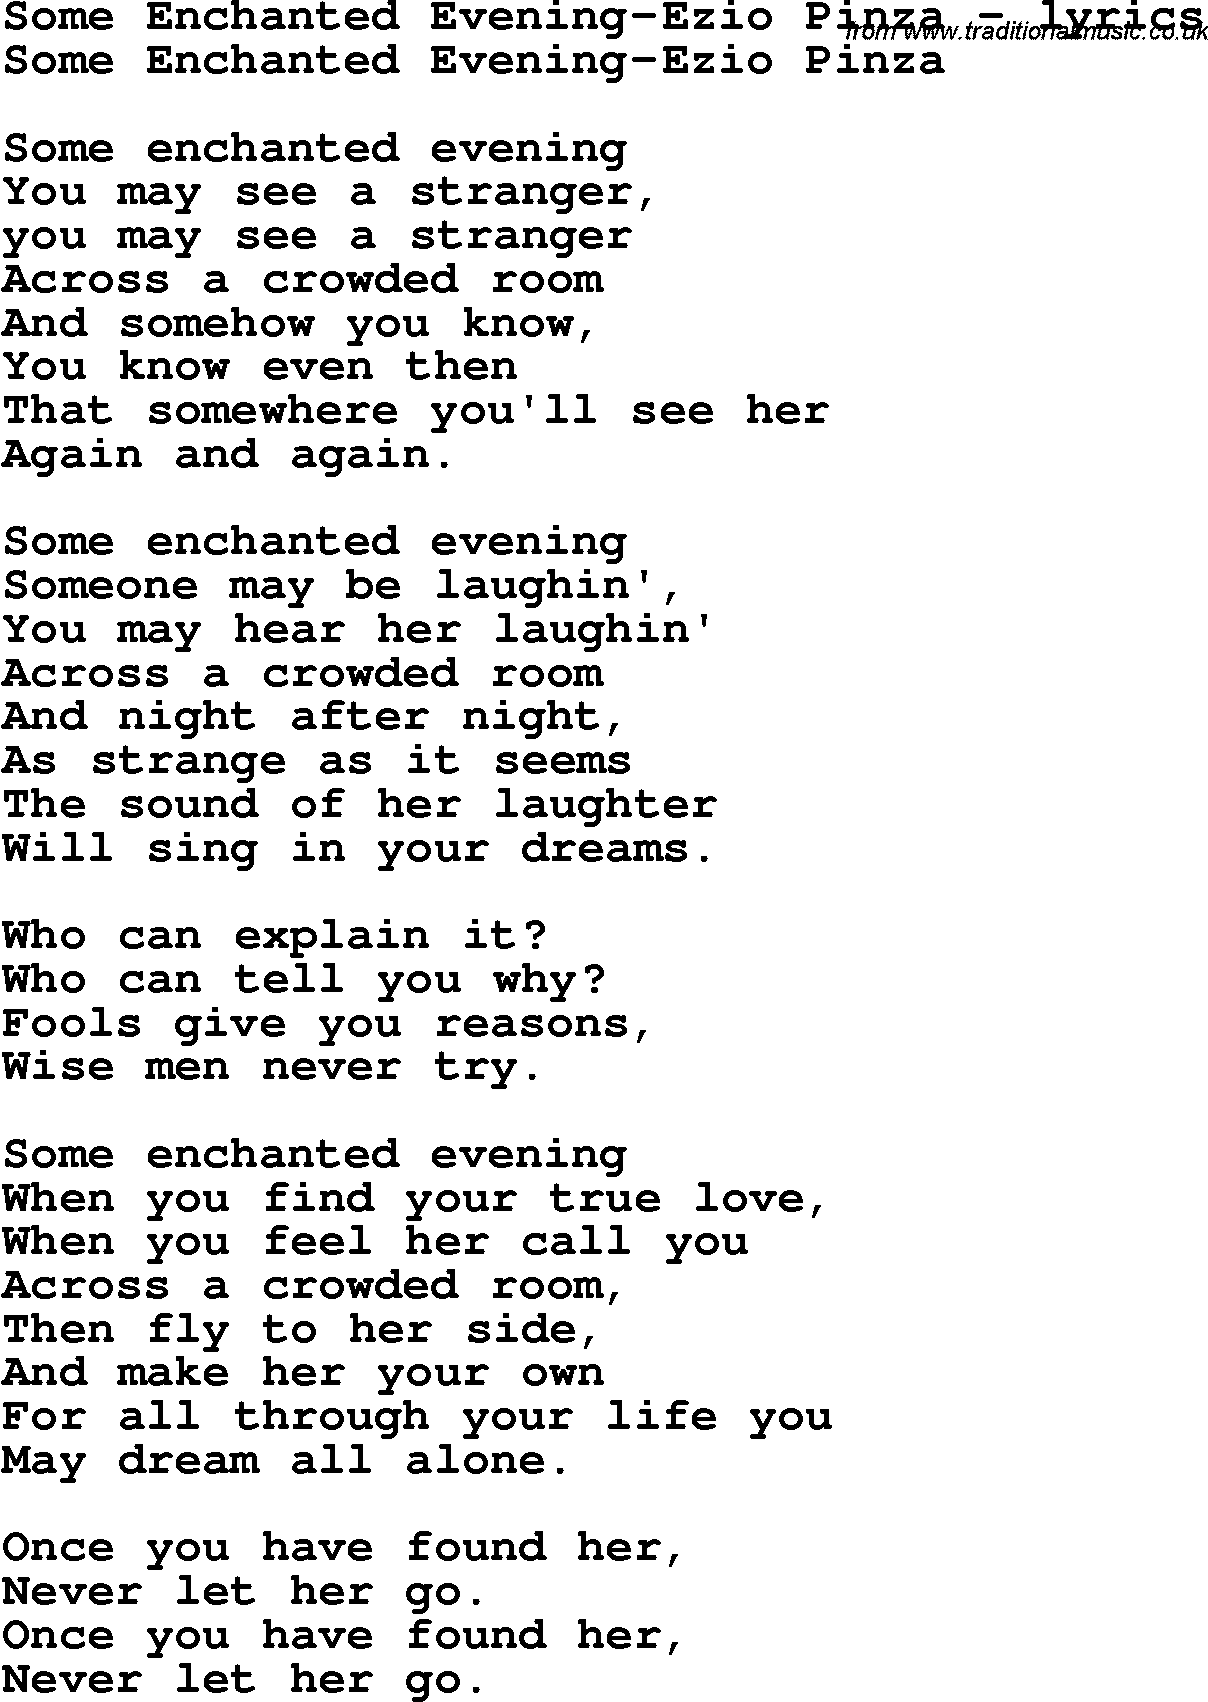 Love Song Lyrics for: Some Enchanted Evening-Ezio Pinza